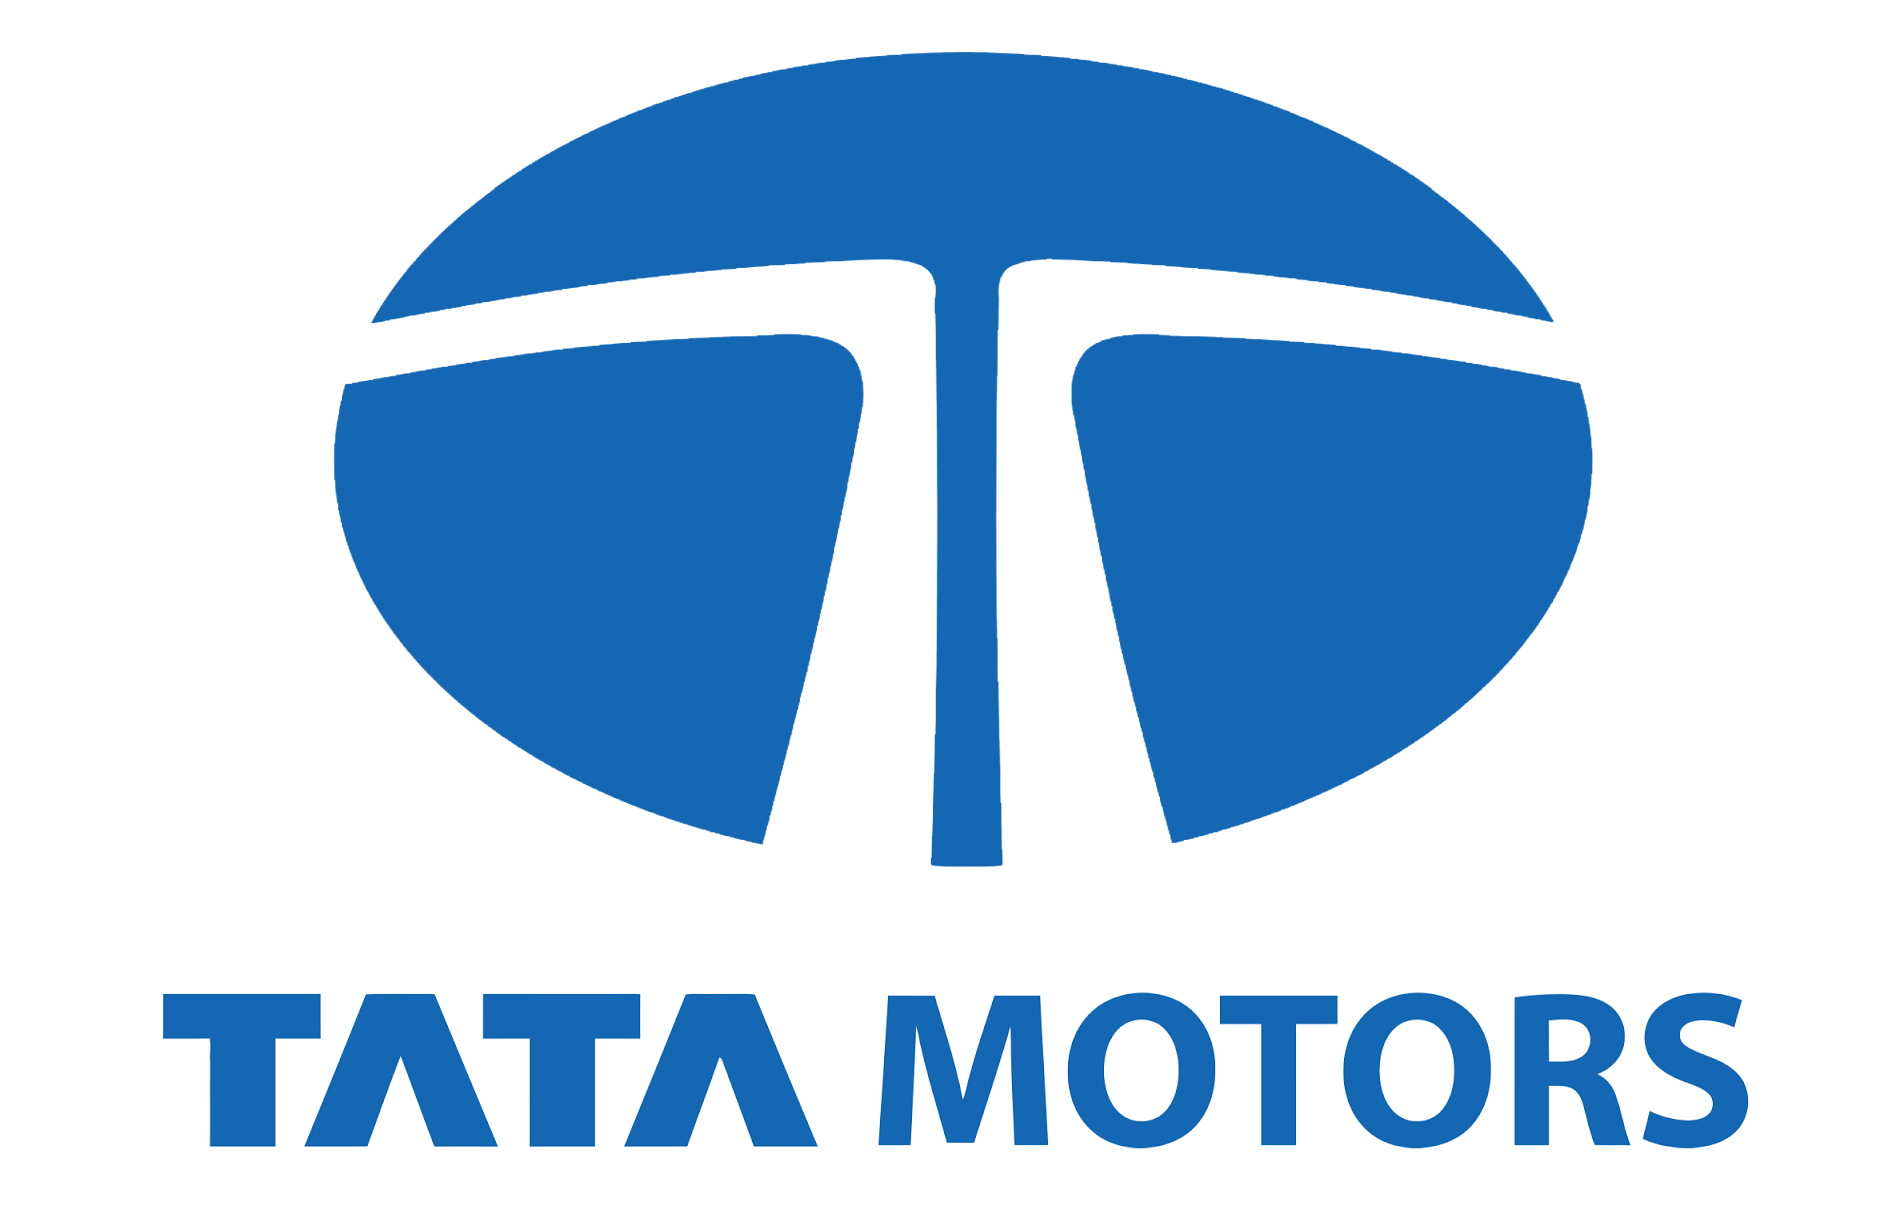 Tata Motors Cars Showroom - KVR Automotive|Show Room|Automotive